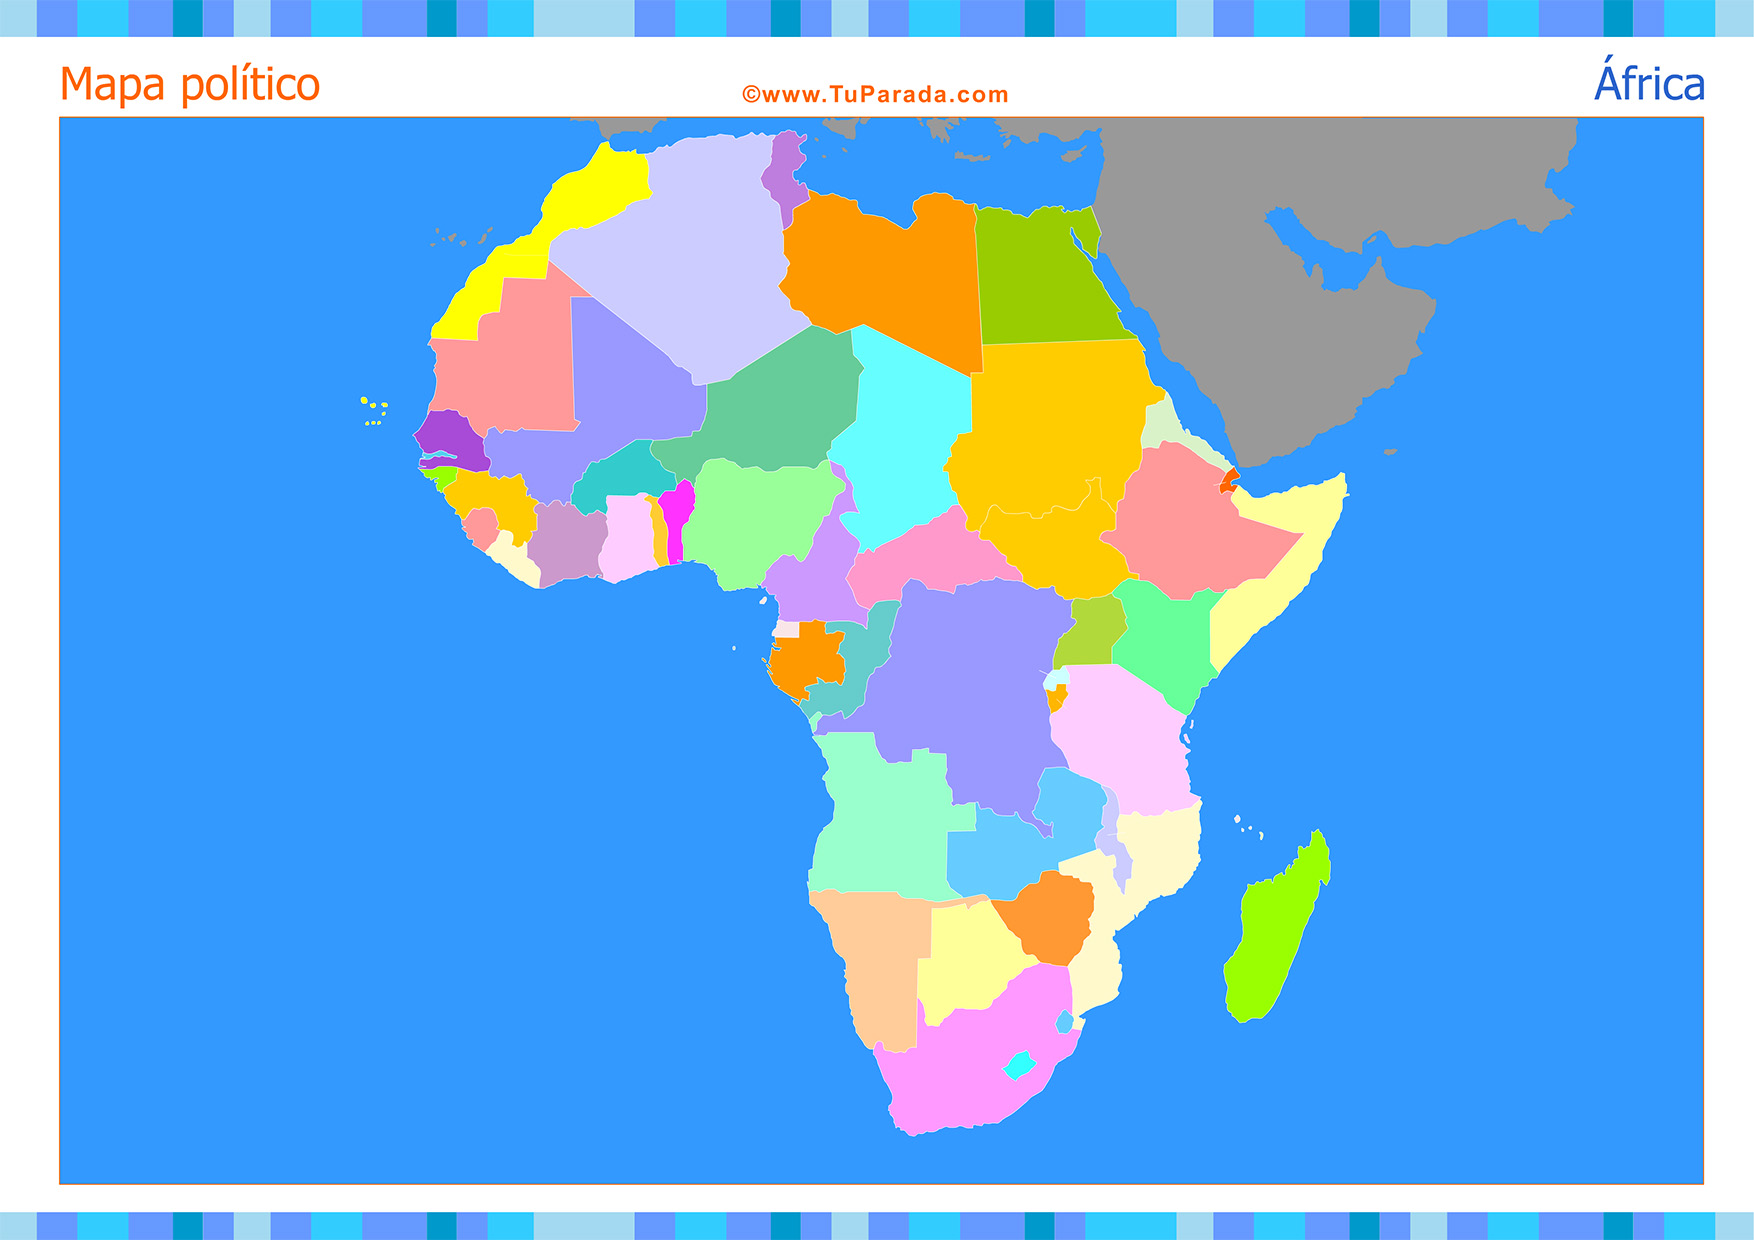 Mapa de África para completar, tarjeta de Mapas, tarjetas animadas y postal...